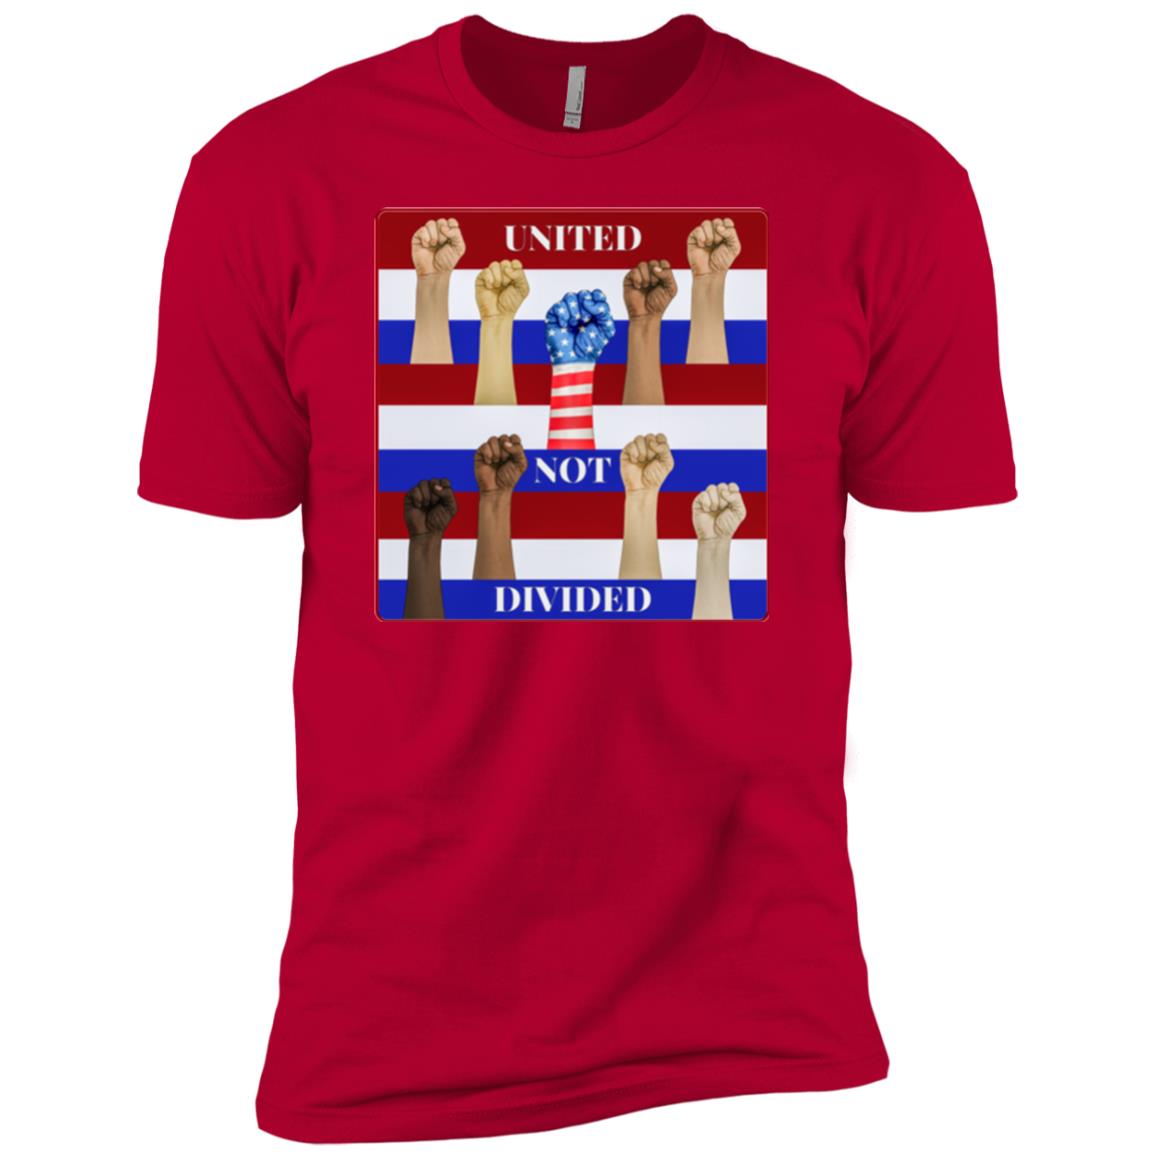 united not divided - Boy's Premium T-Shirt